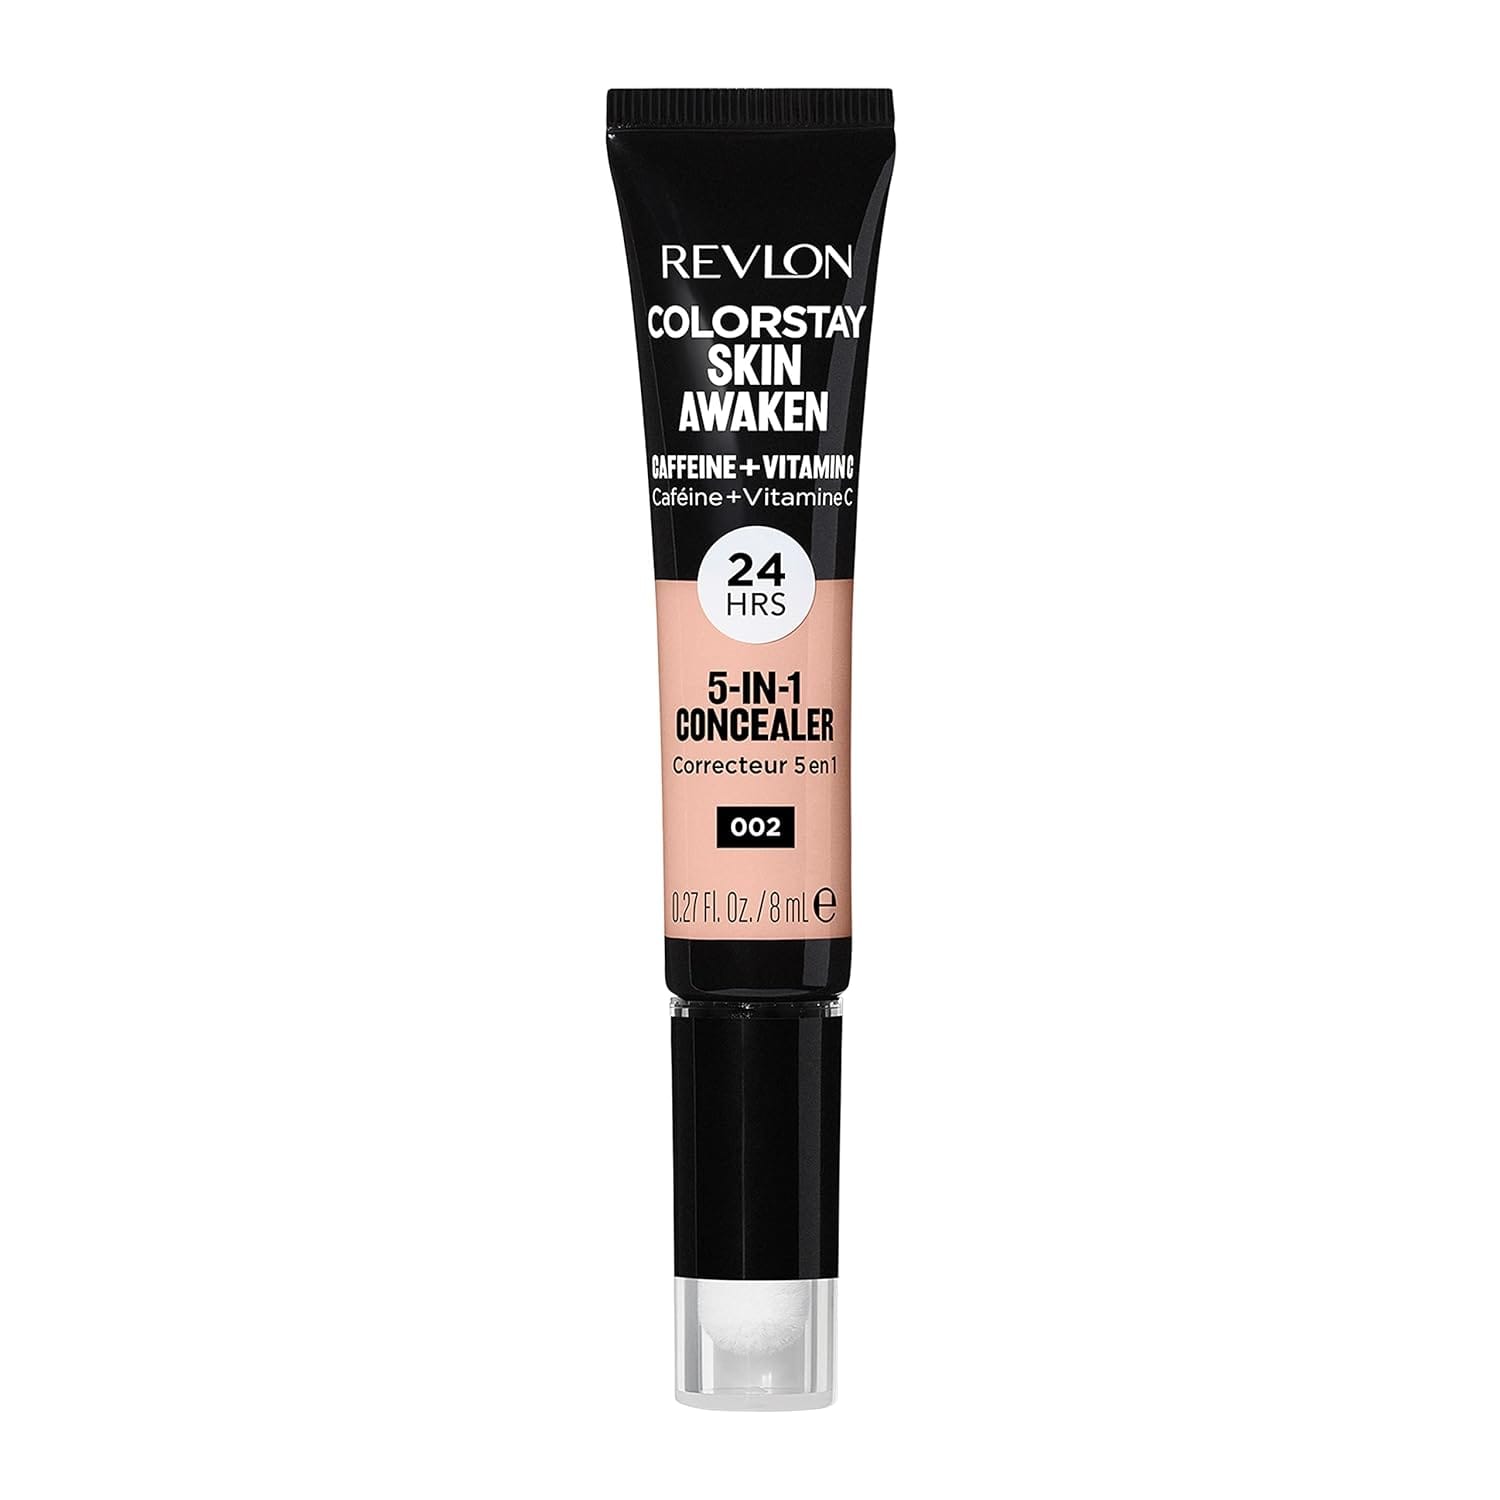 Revlon ColorStay Skin Awaken 5-in-1 Concealer Review